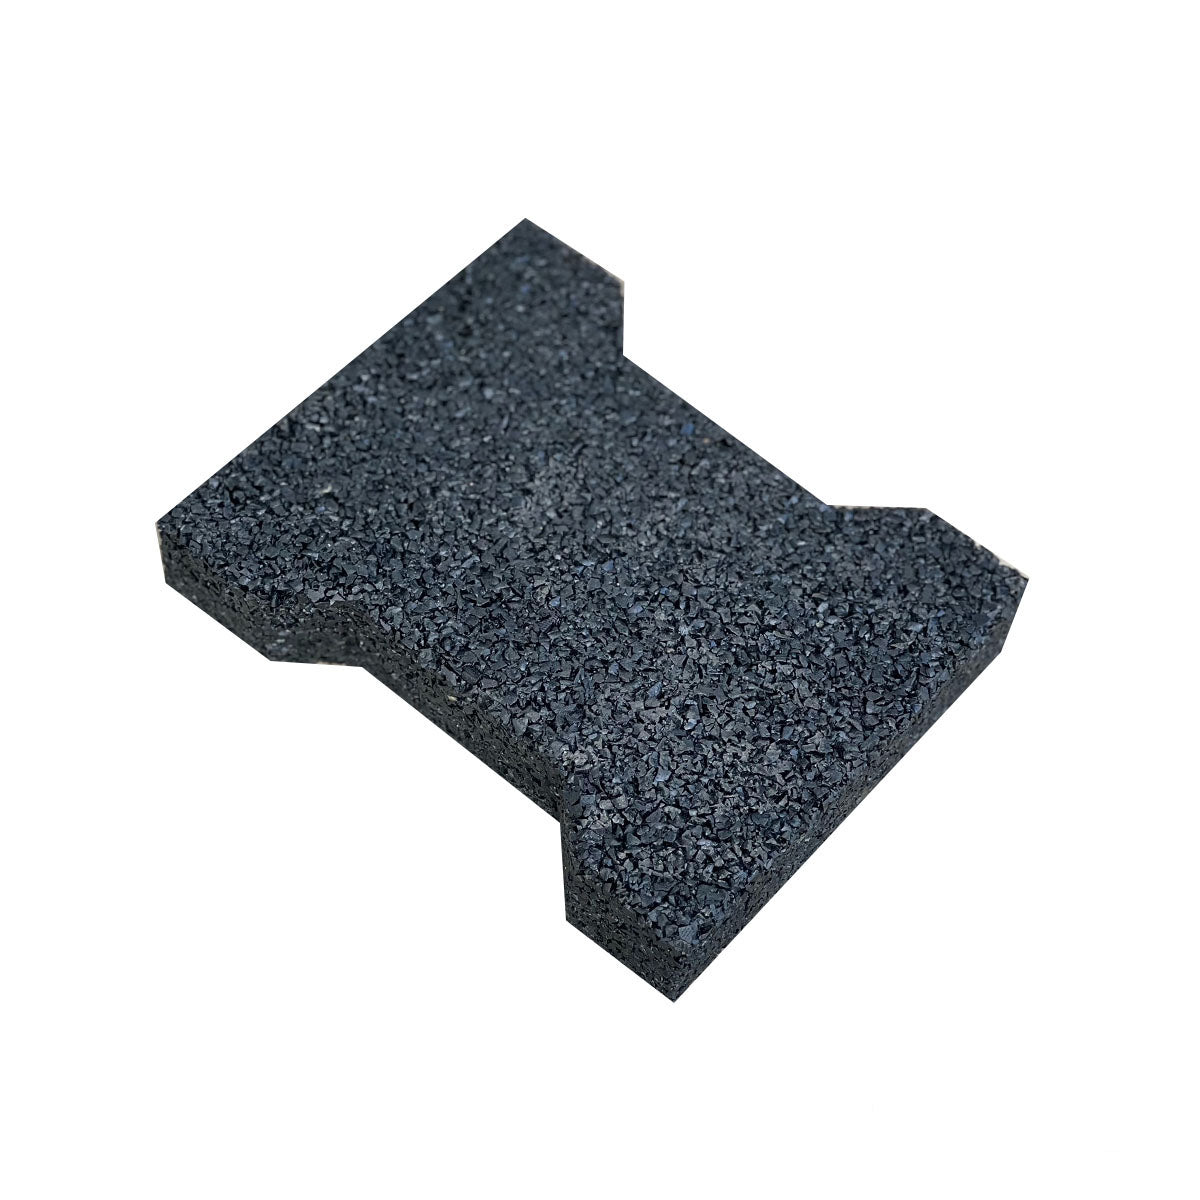 black rubber tile dog bone shape